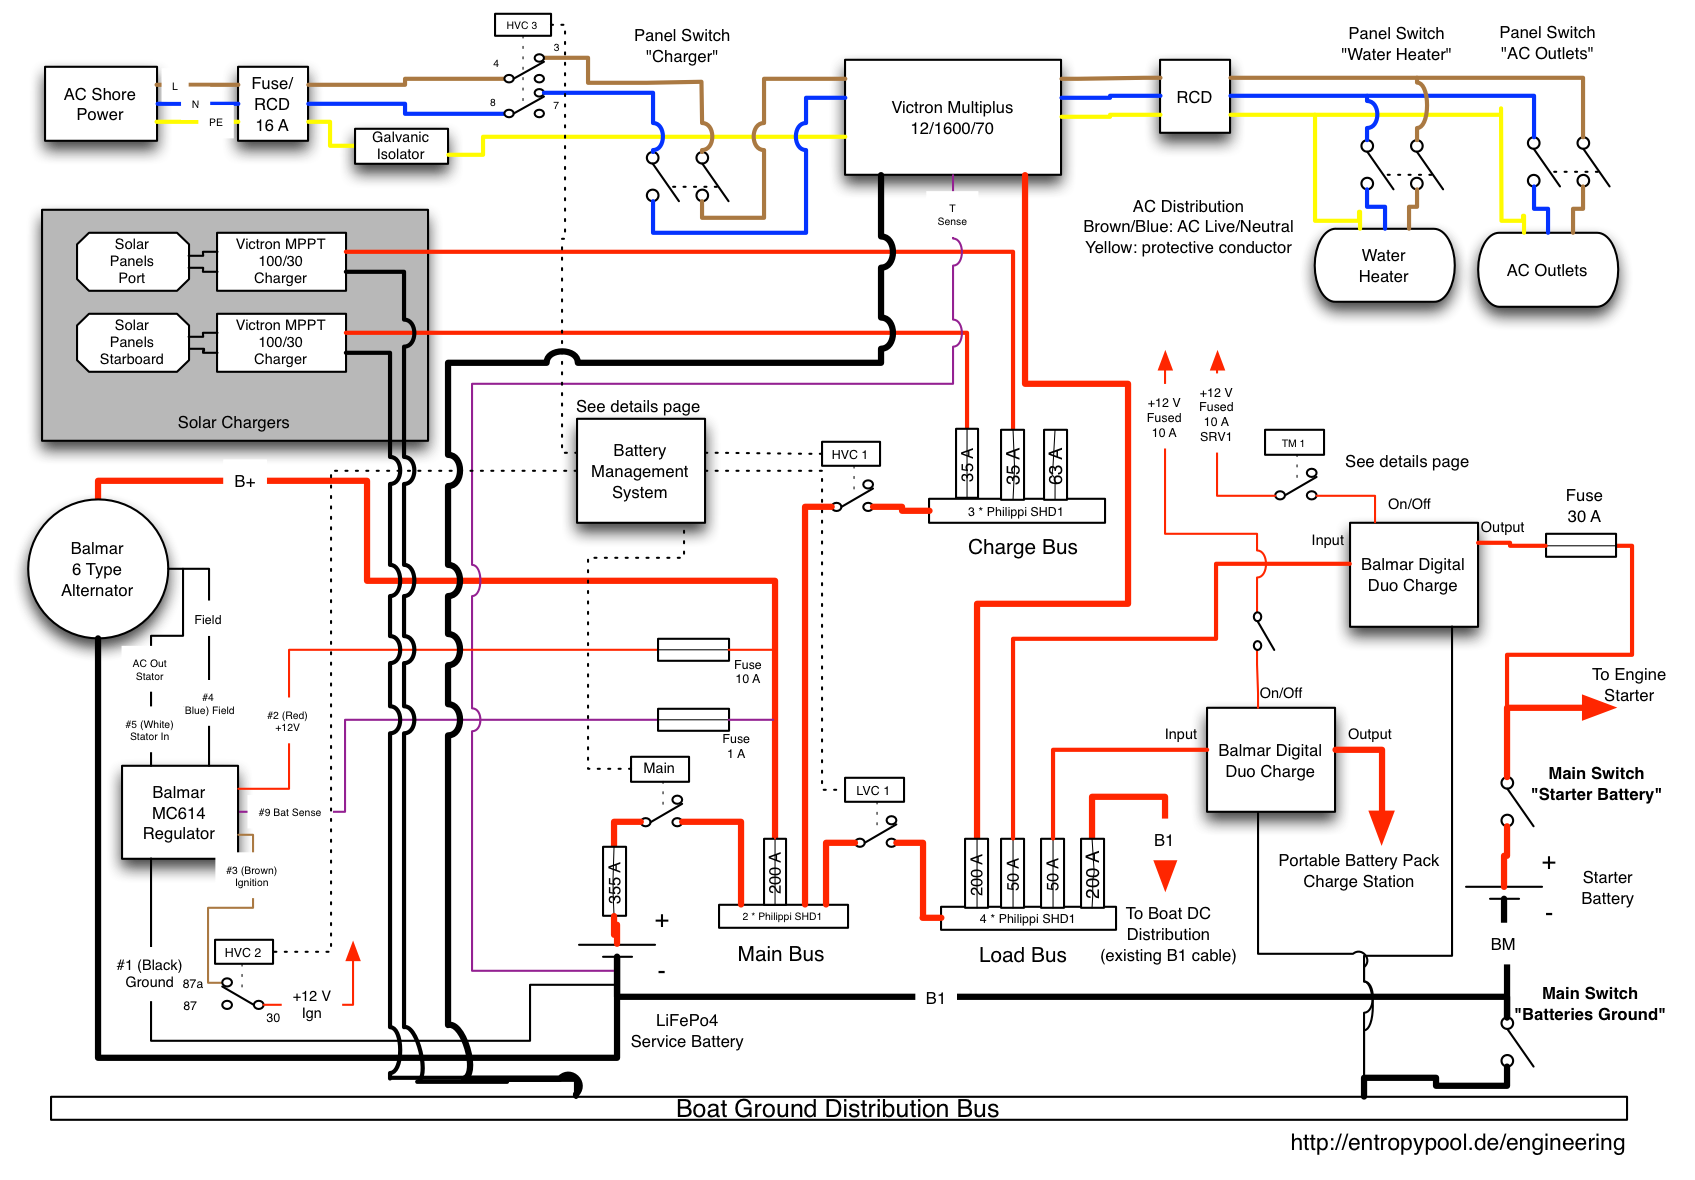 napa voltage regulator 1701 wiring diagram